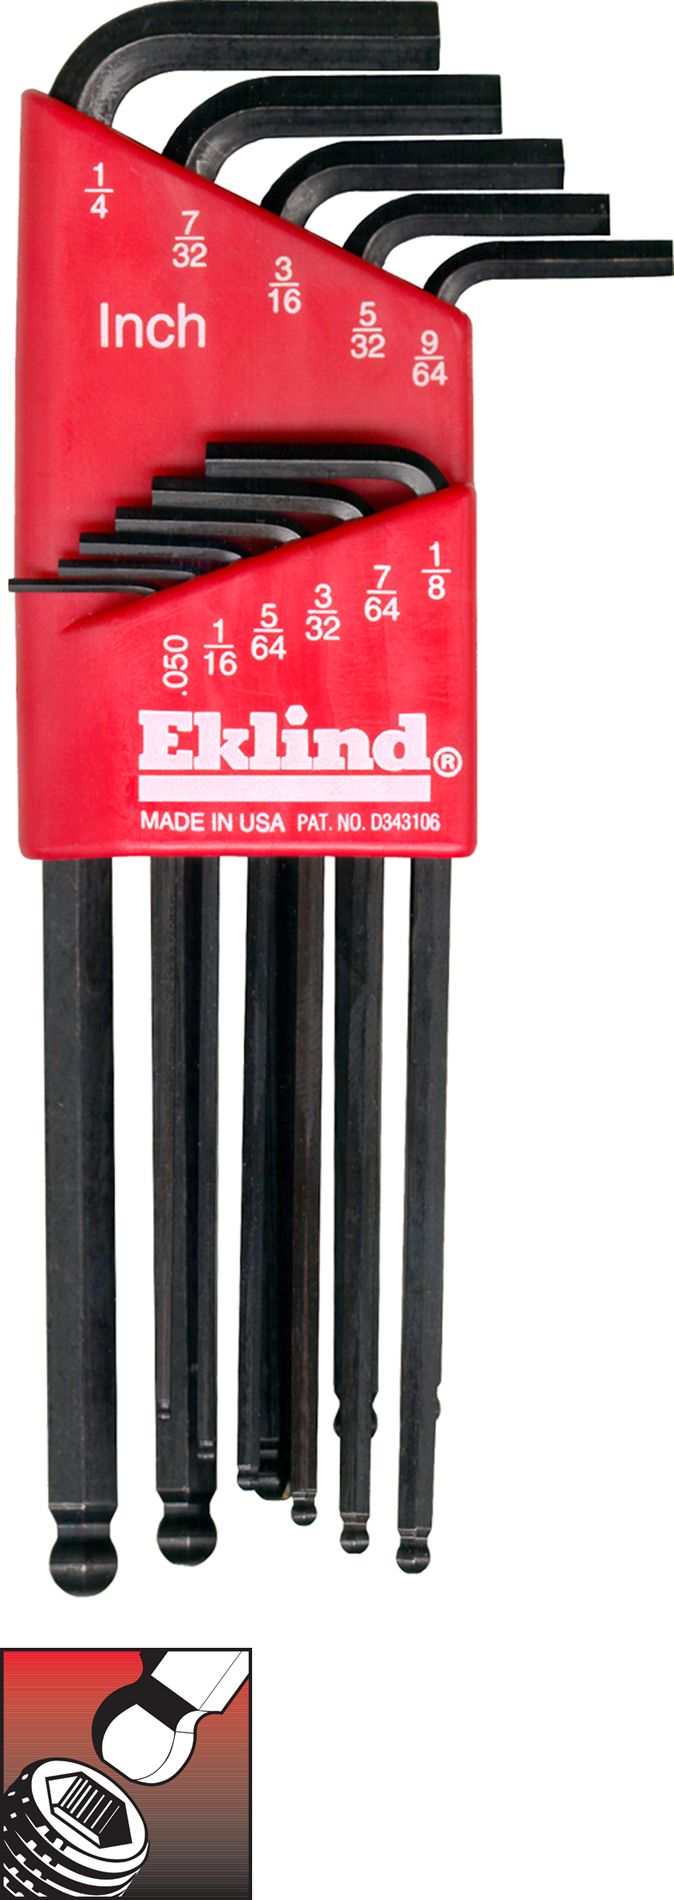 Eklind&#174 Ball-Hex-L&#8482 Hex Key Set, Long Series, 11 keys: .050 to 1/4 Inch & Holder